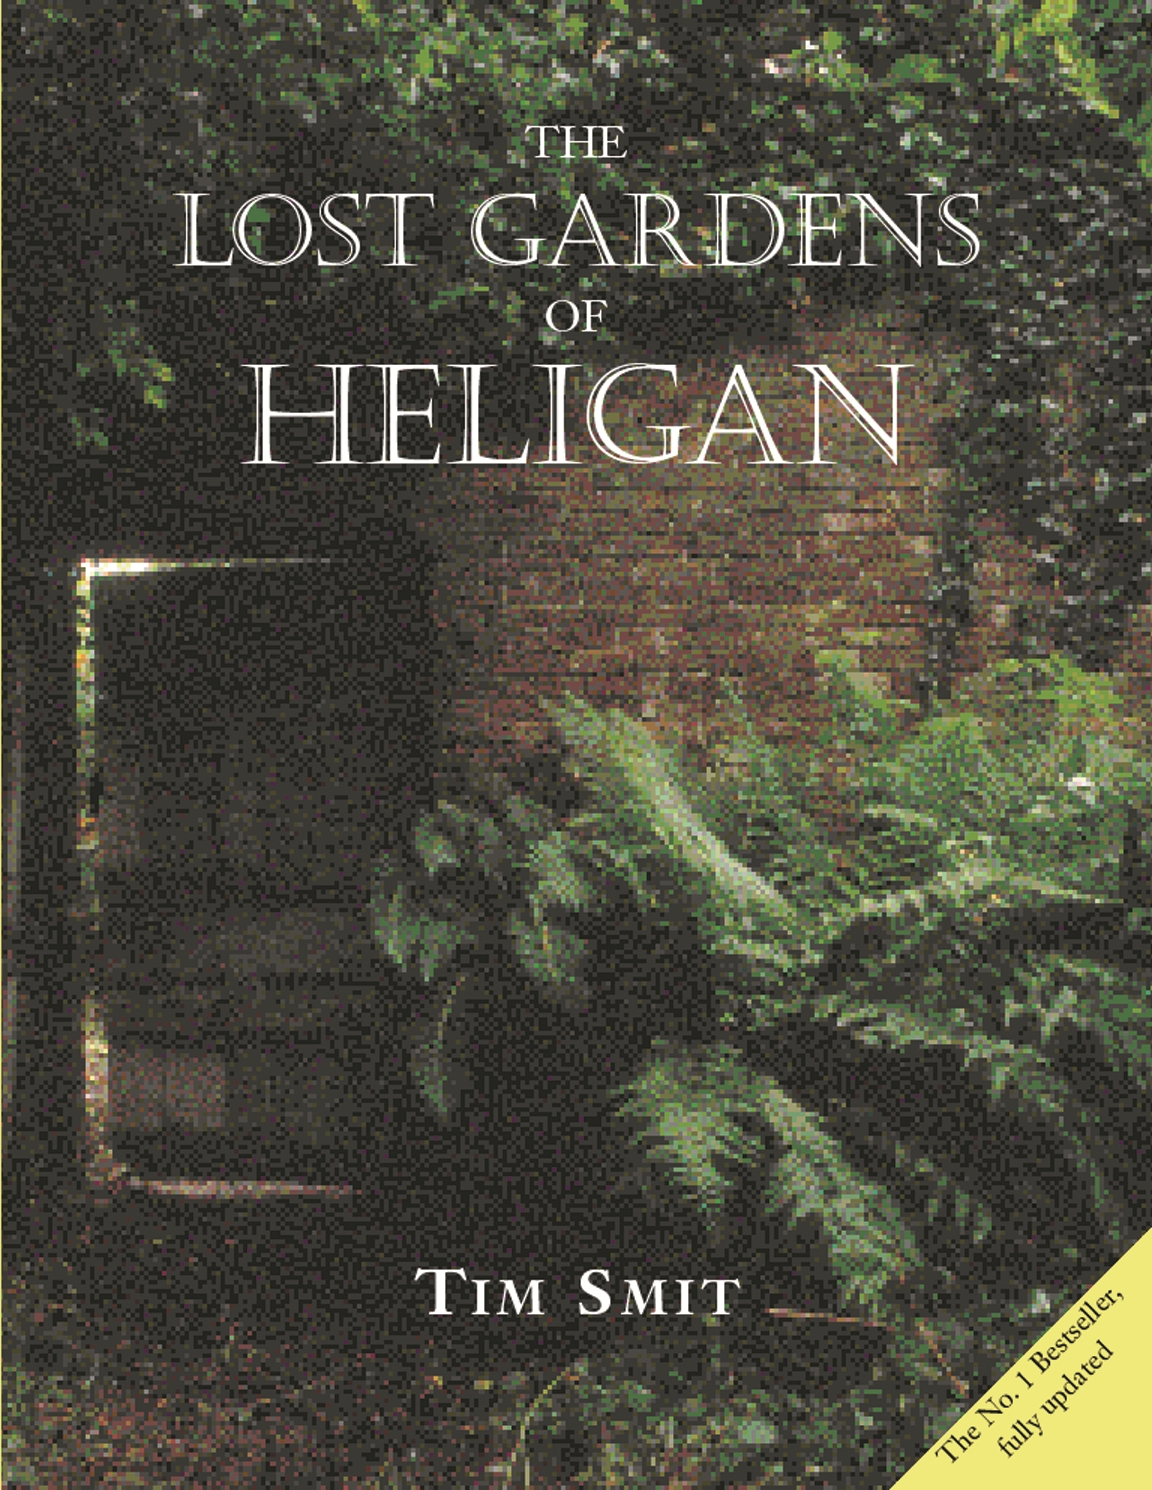 The Lost Garden of Heligan